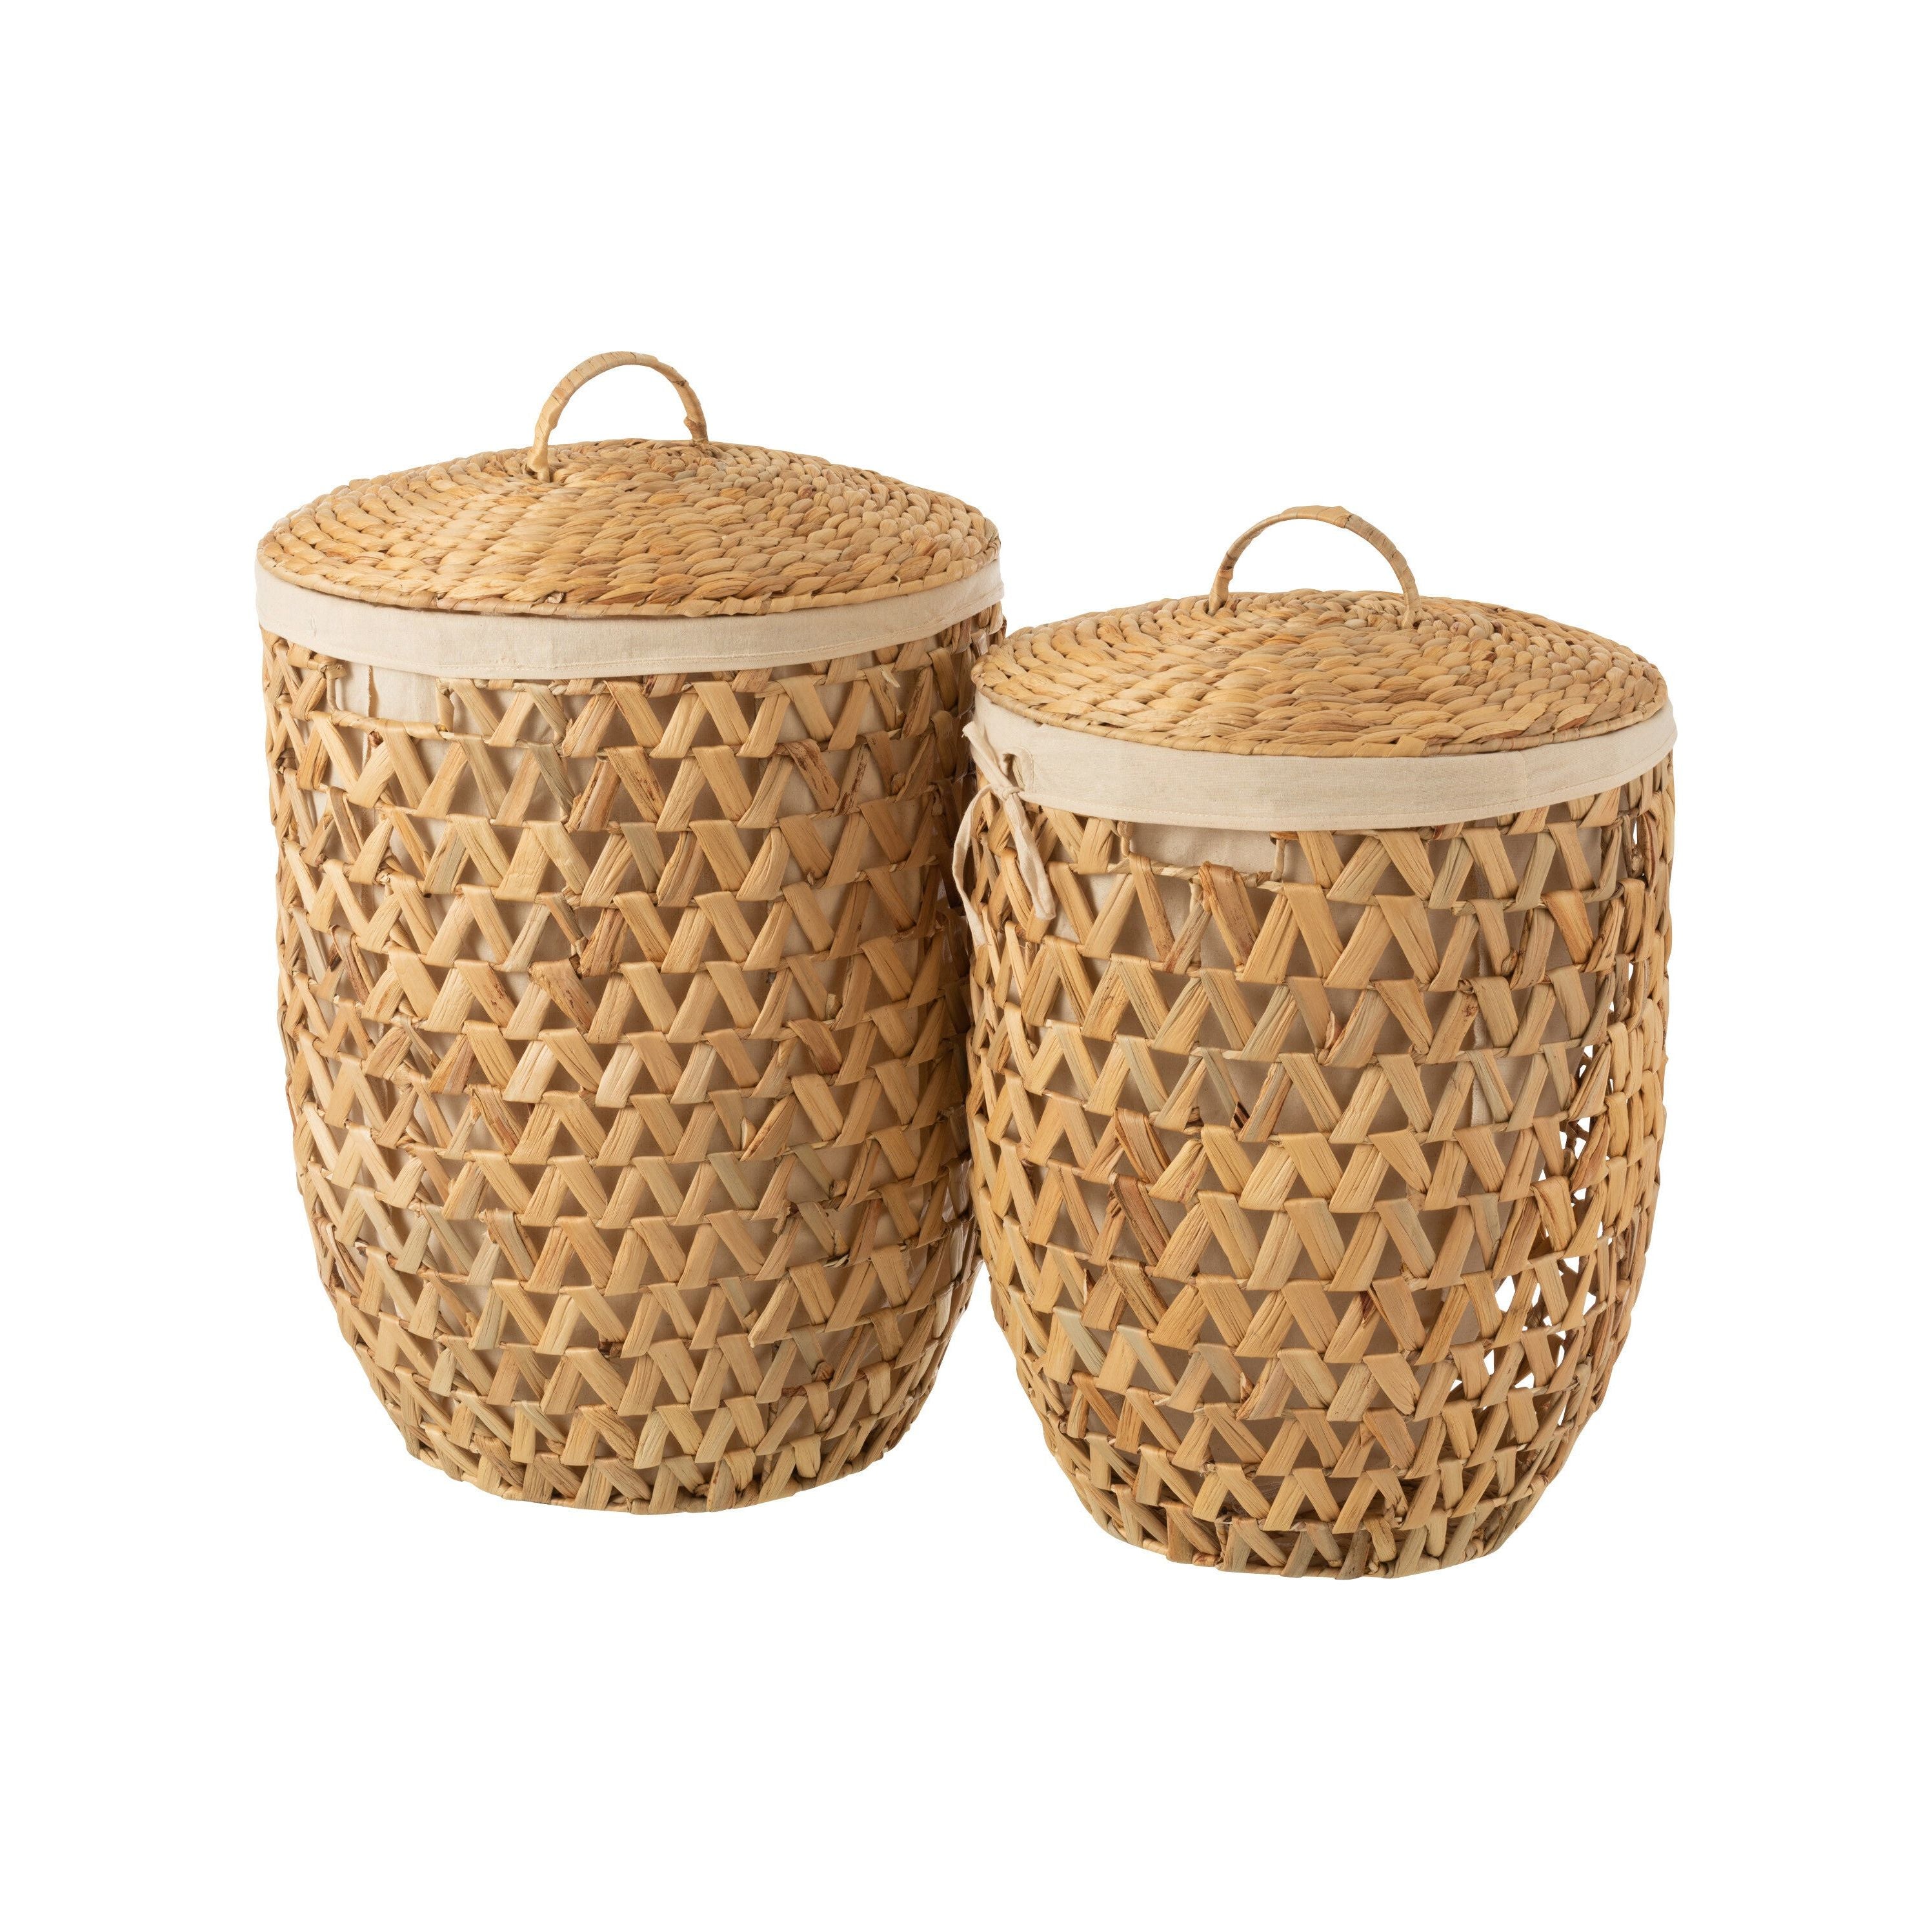 Laundry Baskets + Lid Water Hyacinth Natural